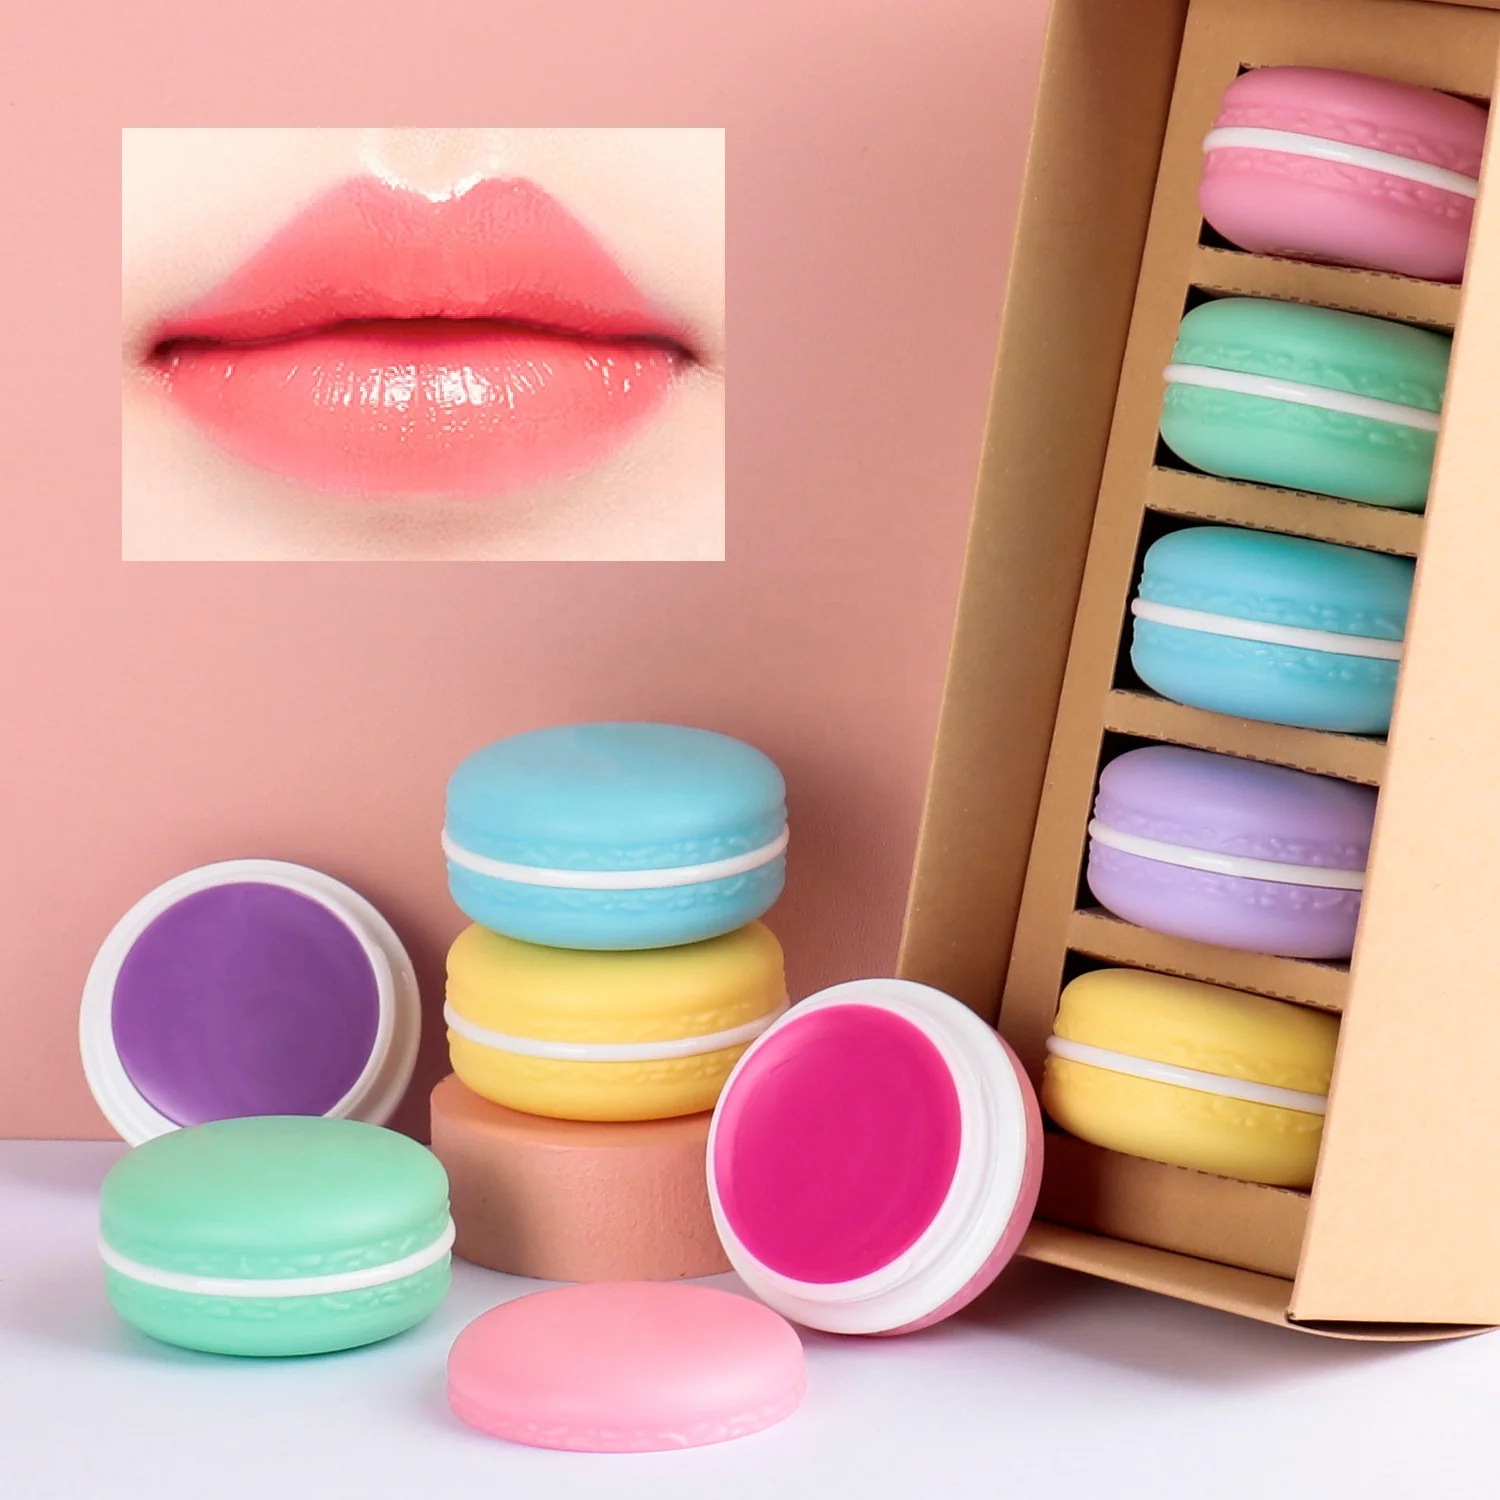 

High Quality New Cute Macaron Shaped hydrating Moisturizing Repair Lips Vegan Organic Lip Balm Private Label Lip Balm, 5 colors